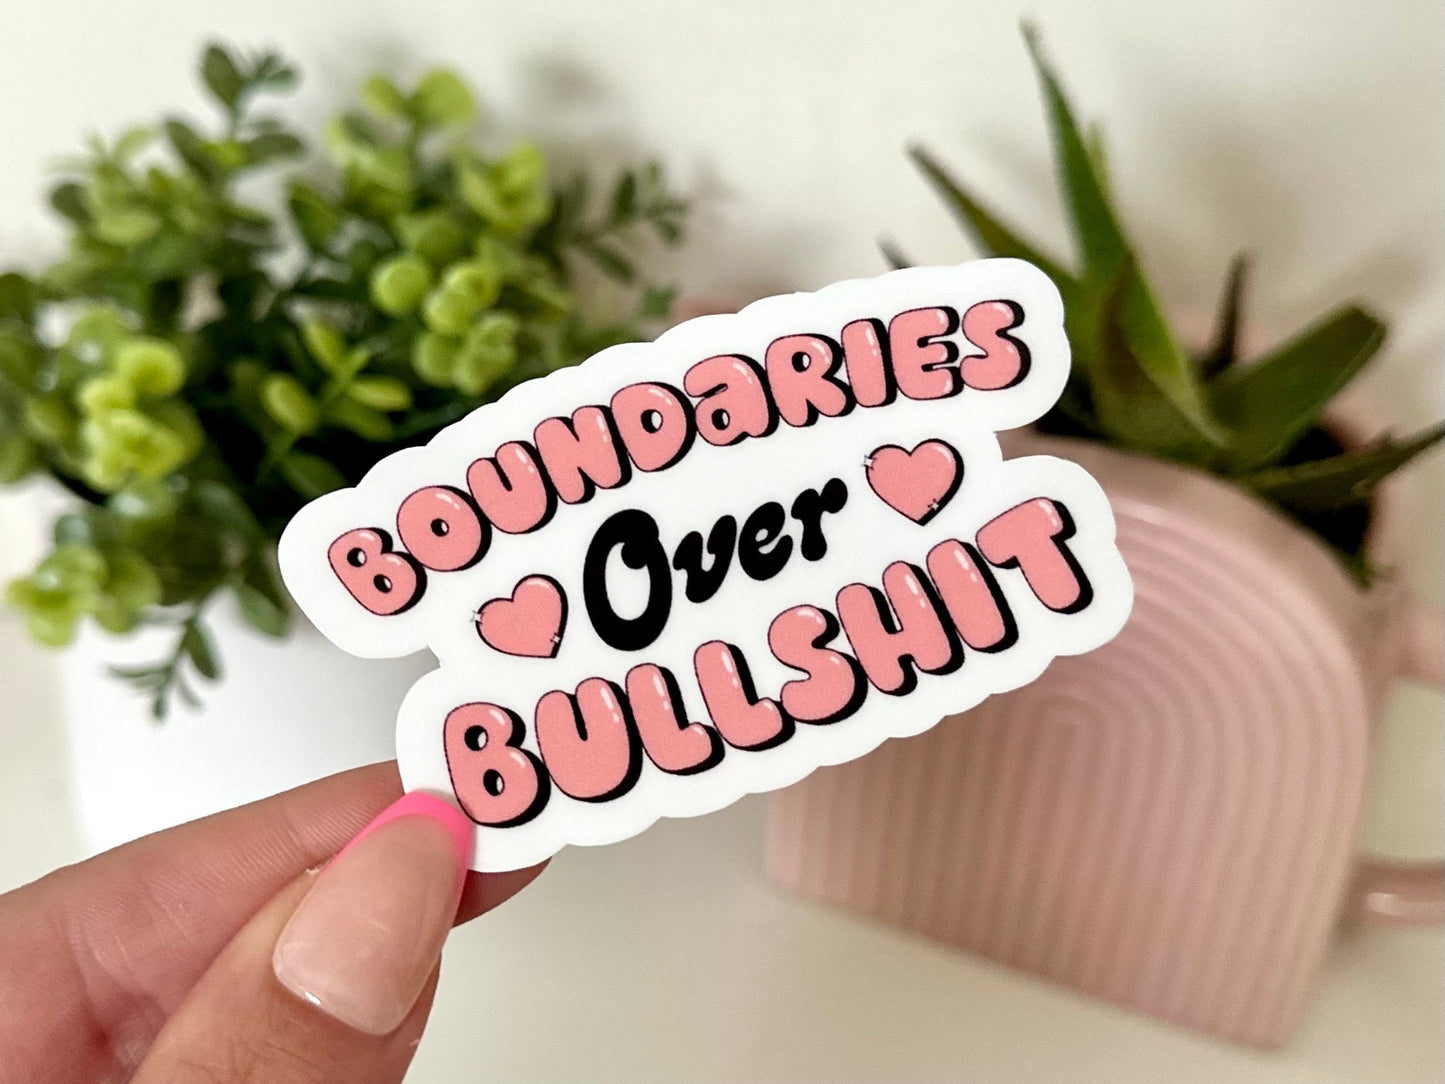 Boundaries Over Bullsh*t Waterproof Sticker, Groovy Sticker, Self Care, Self Love Sticker, Mental Health Gifts